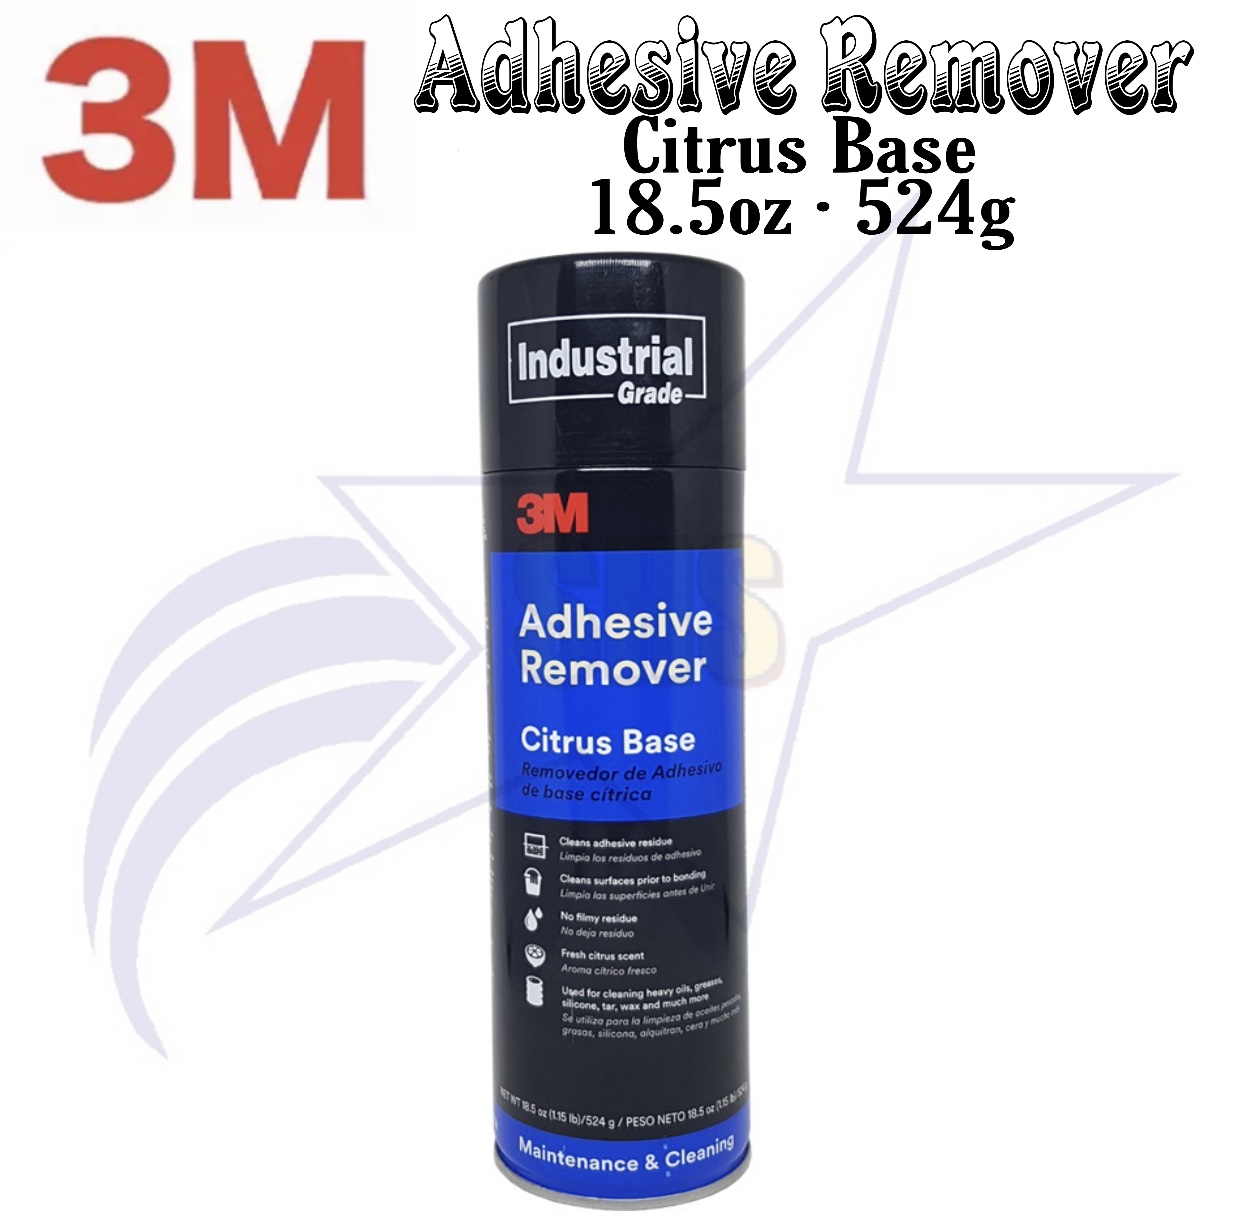 3M Adhesive Remover Citrus Base 5oz